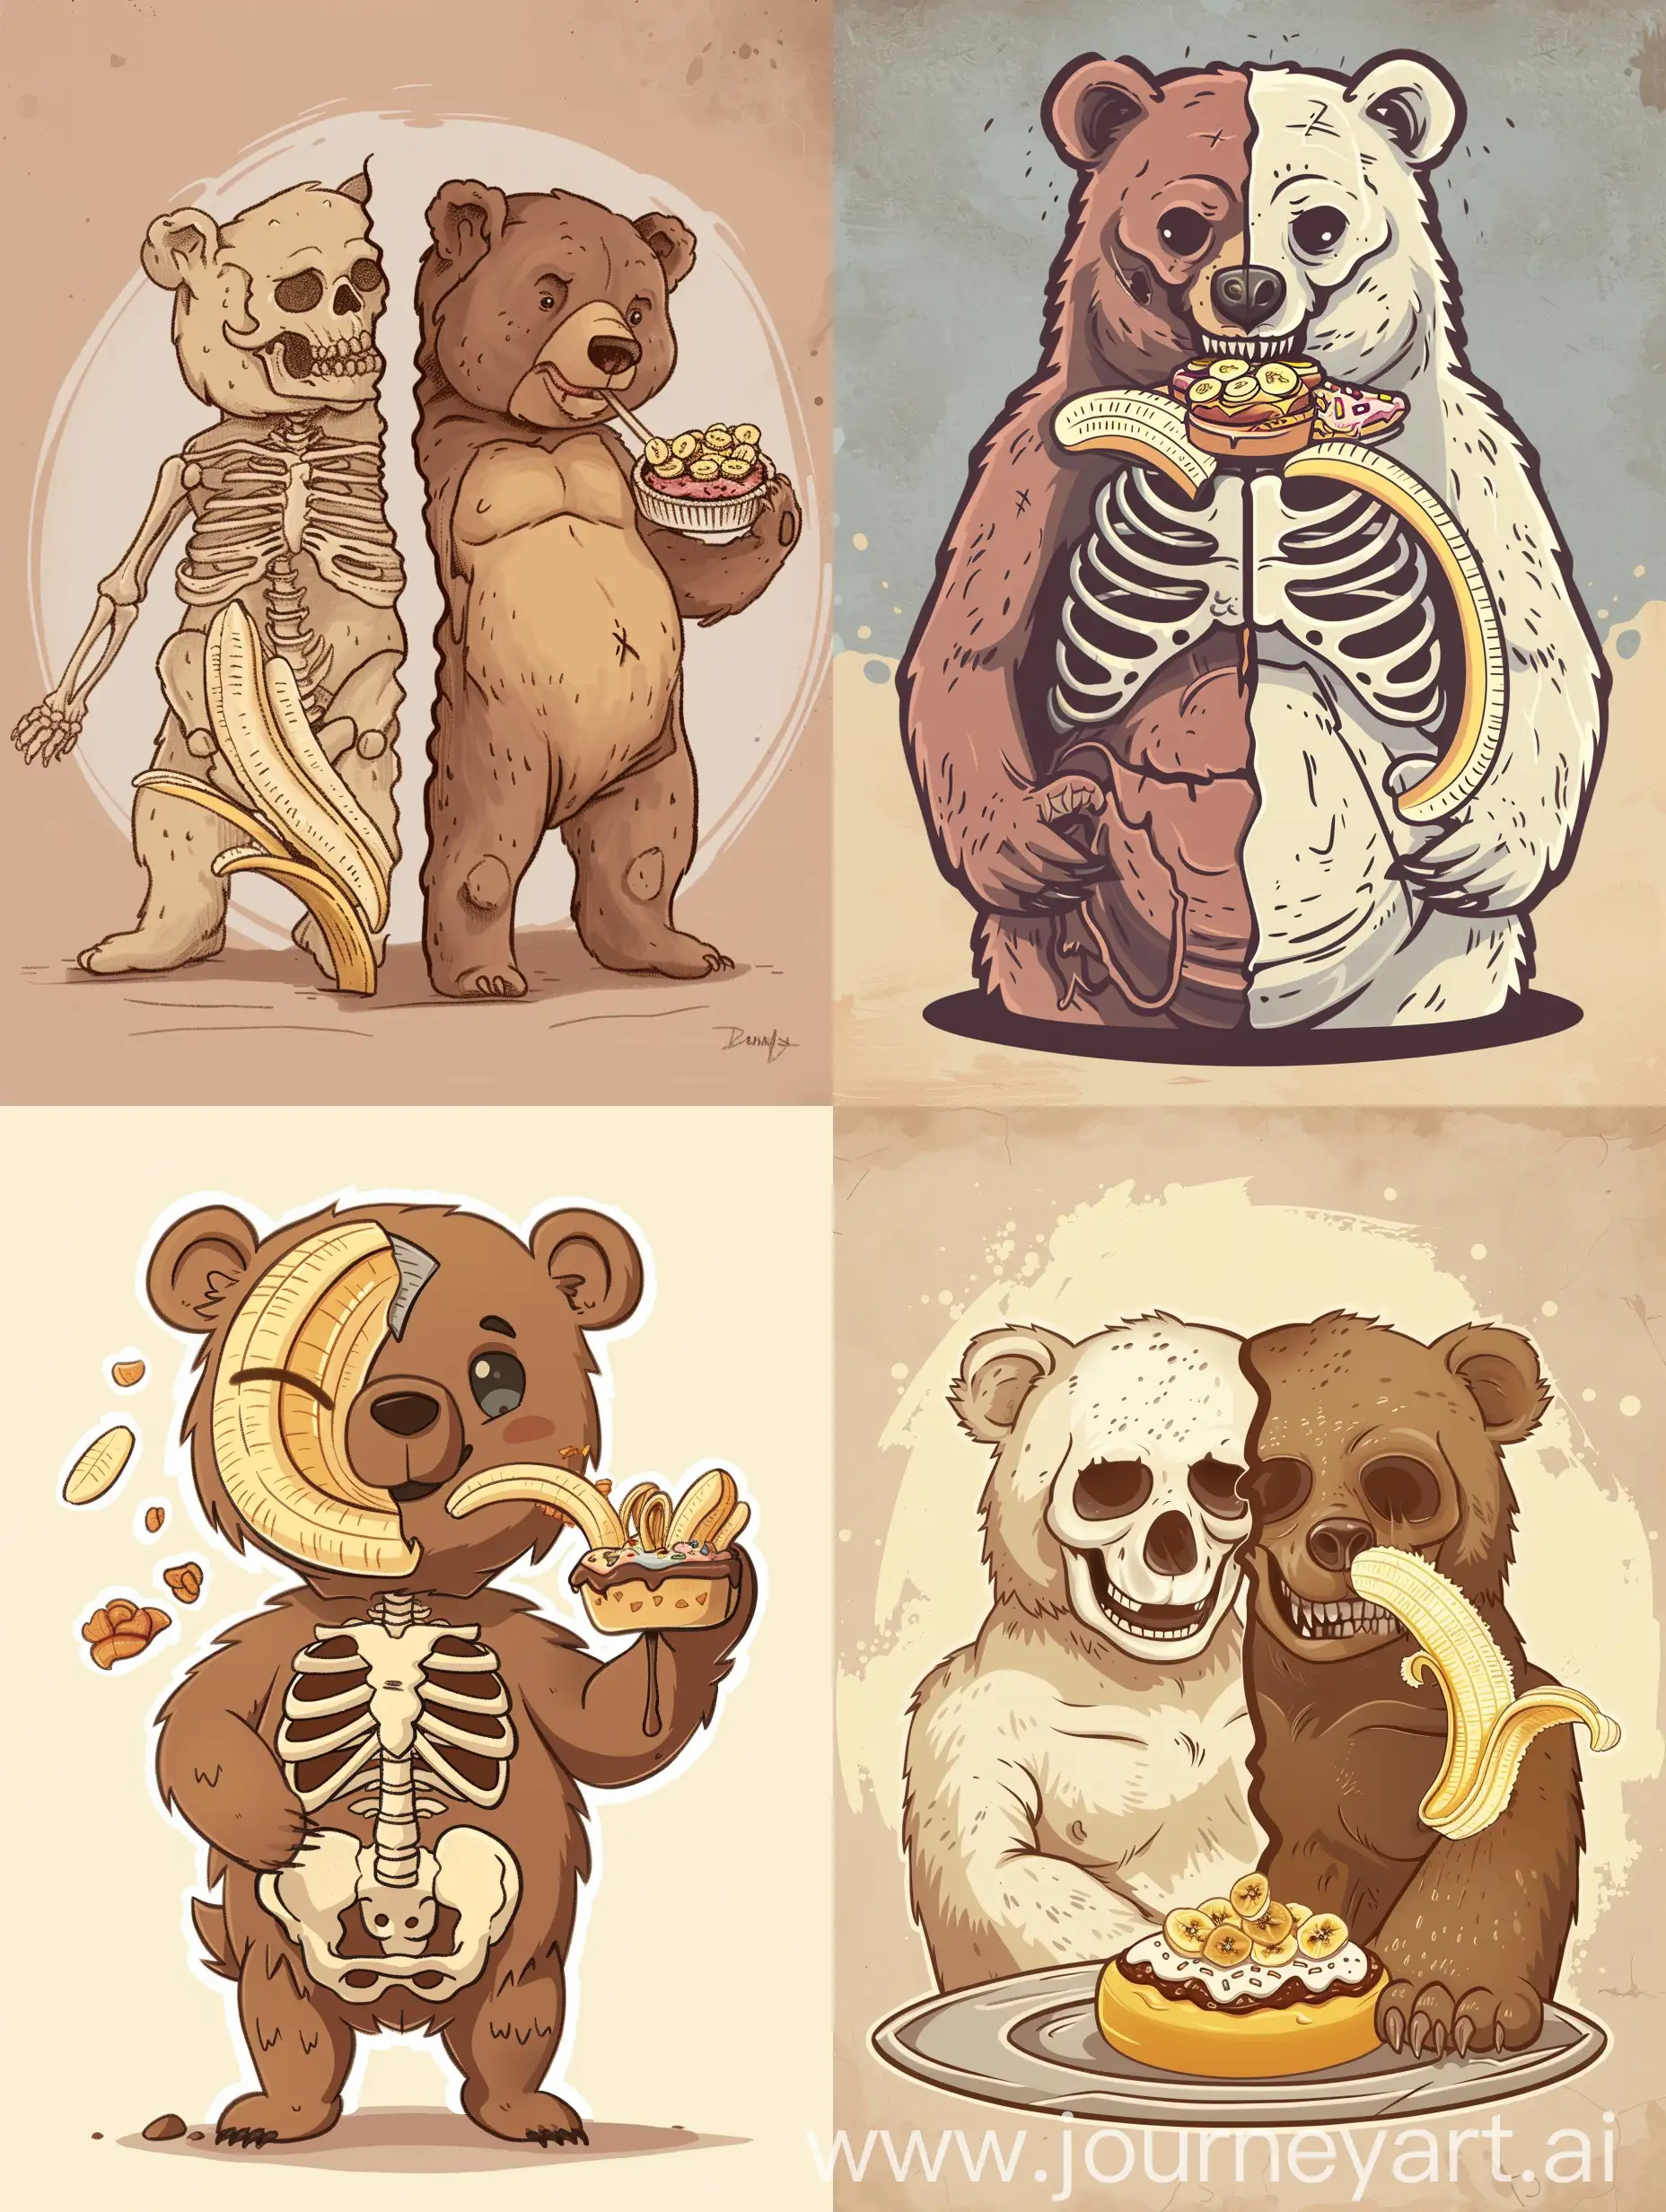 Playful-Cartoon-Bear-Enjoying-Banana-Split-with-Skeleton-Revealed